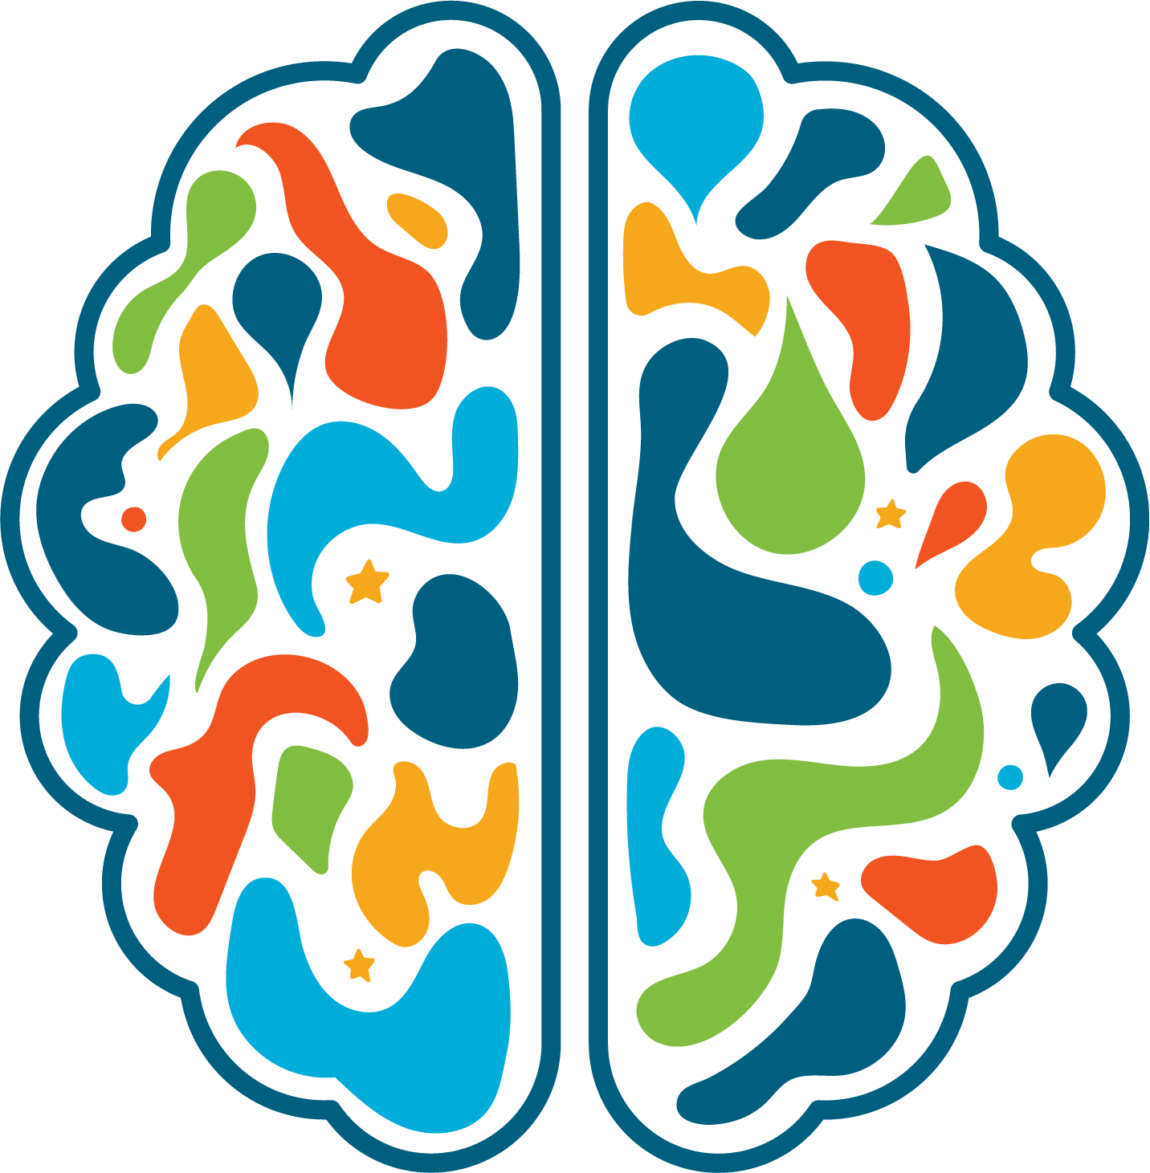 Brainier Webinar: Creating Inclusive Learning Programs for Neurodivergent Employees